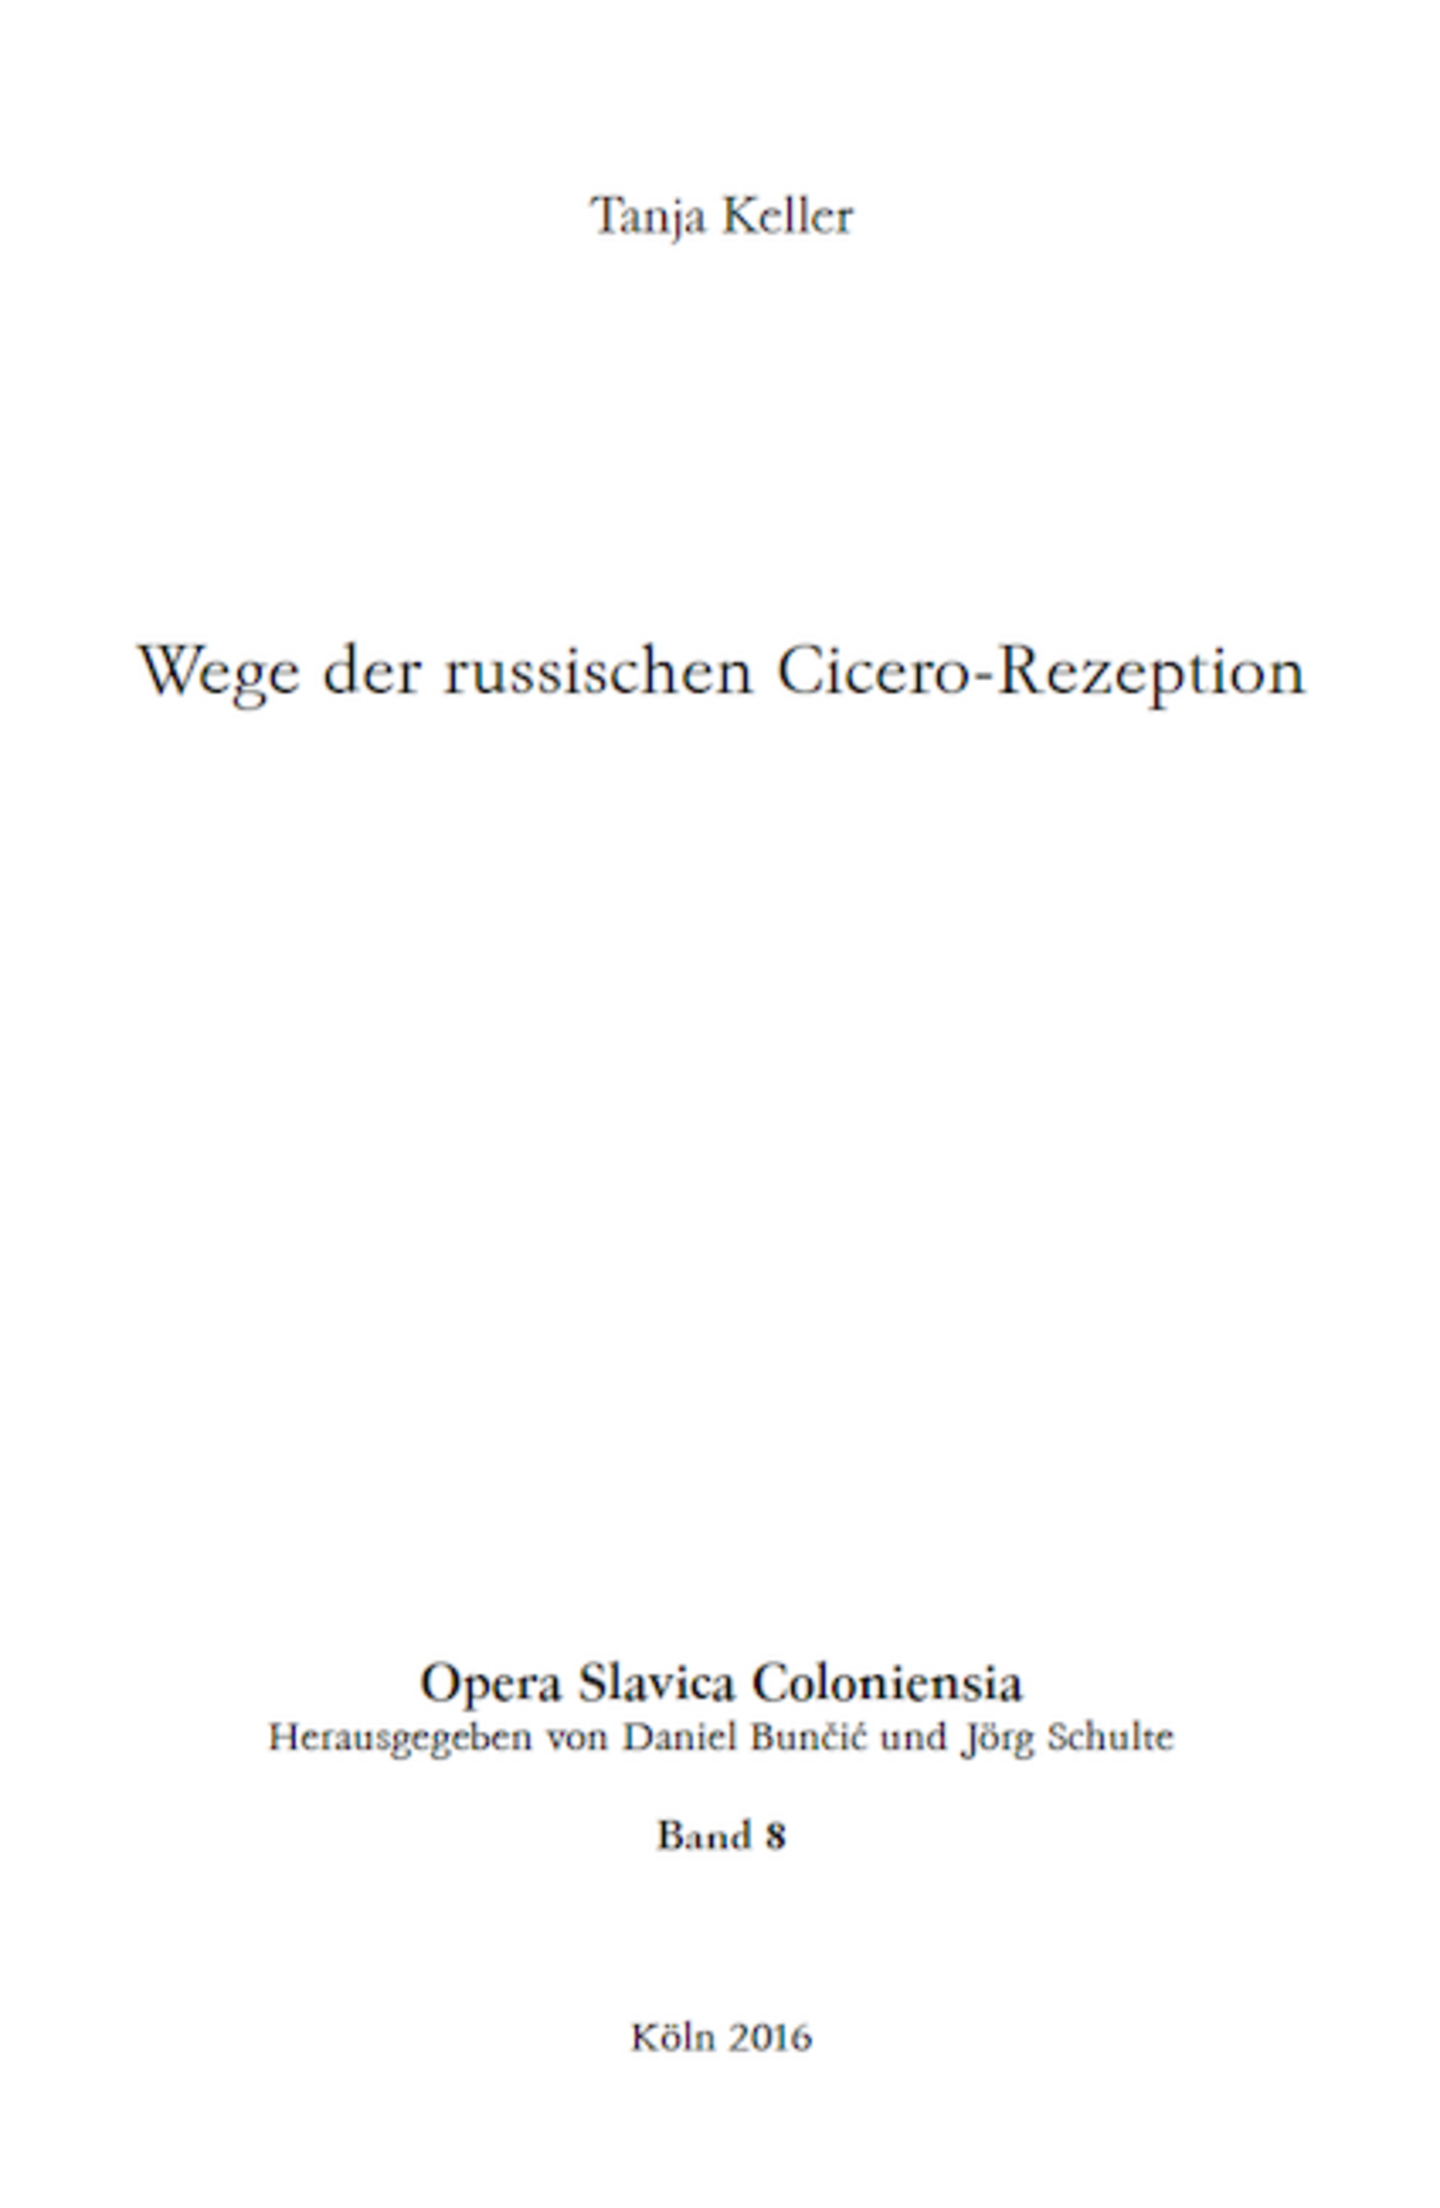 Opera Slavica Coloniensia, Bd. 8: Tanja Keller (2016) Wege der russischen Cicero-Rezeption